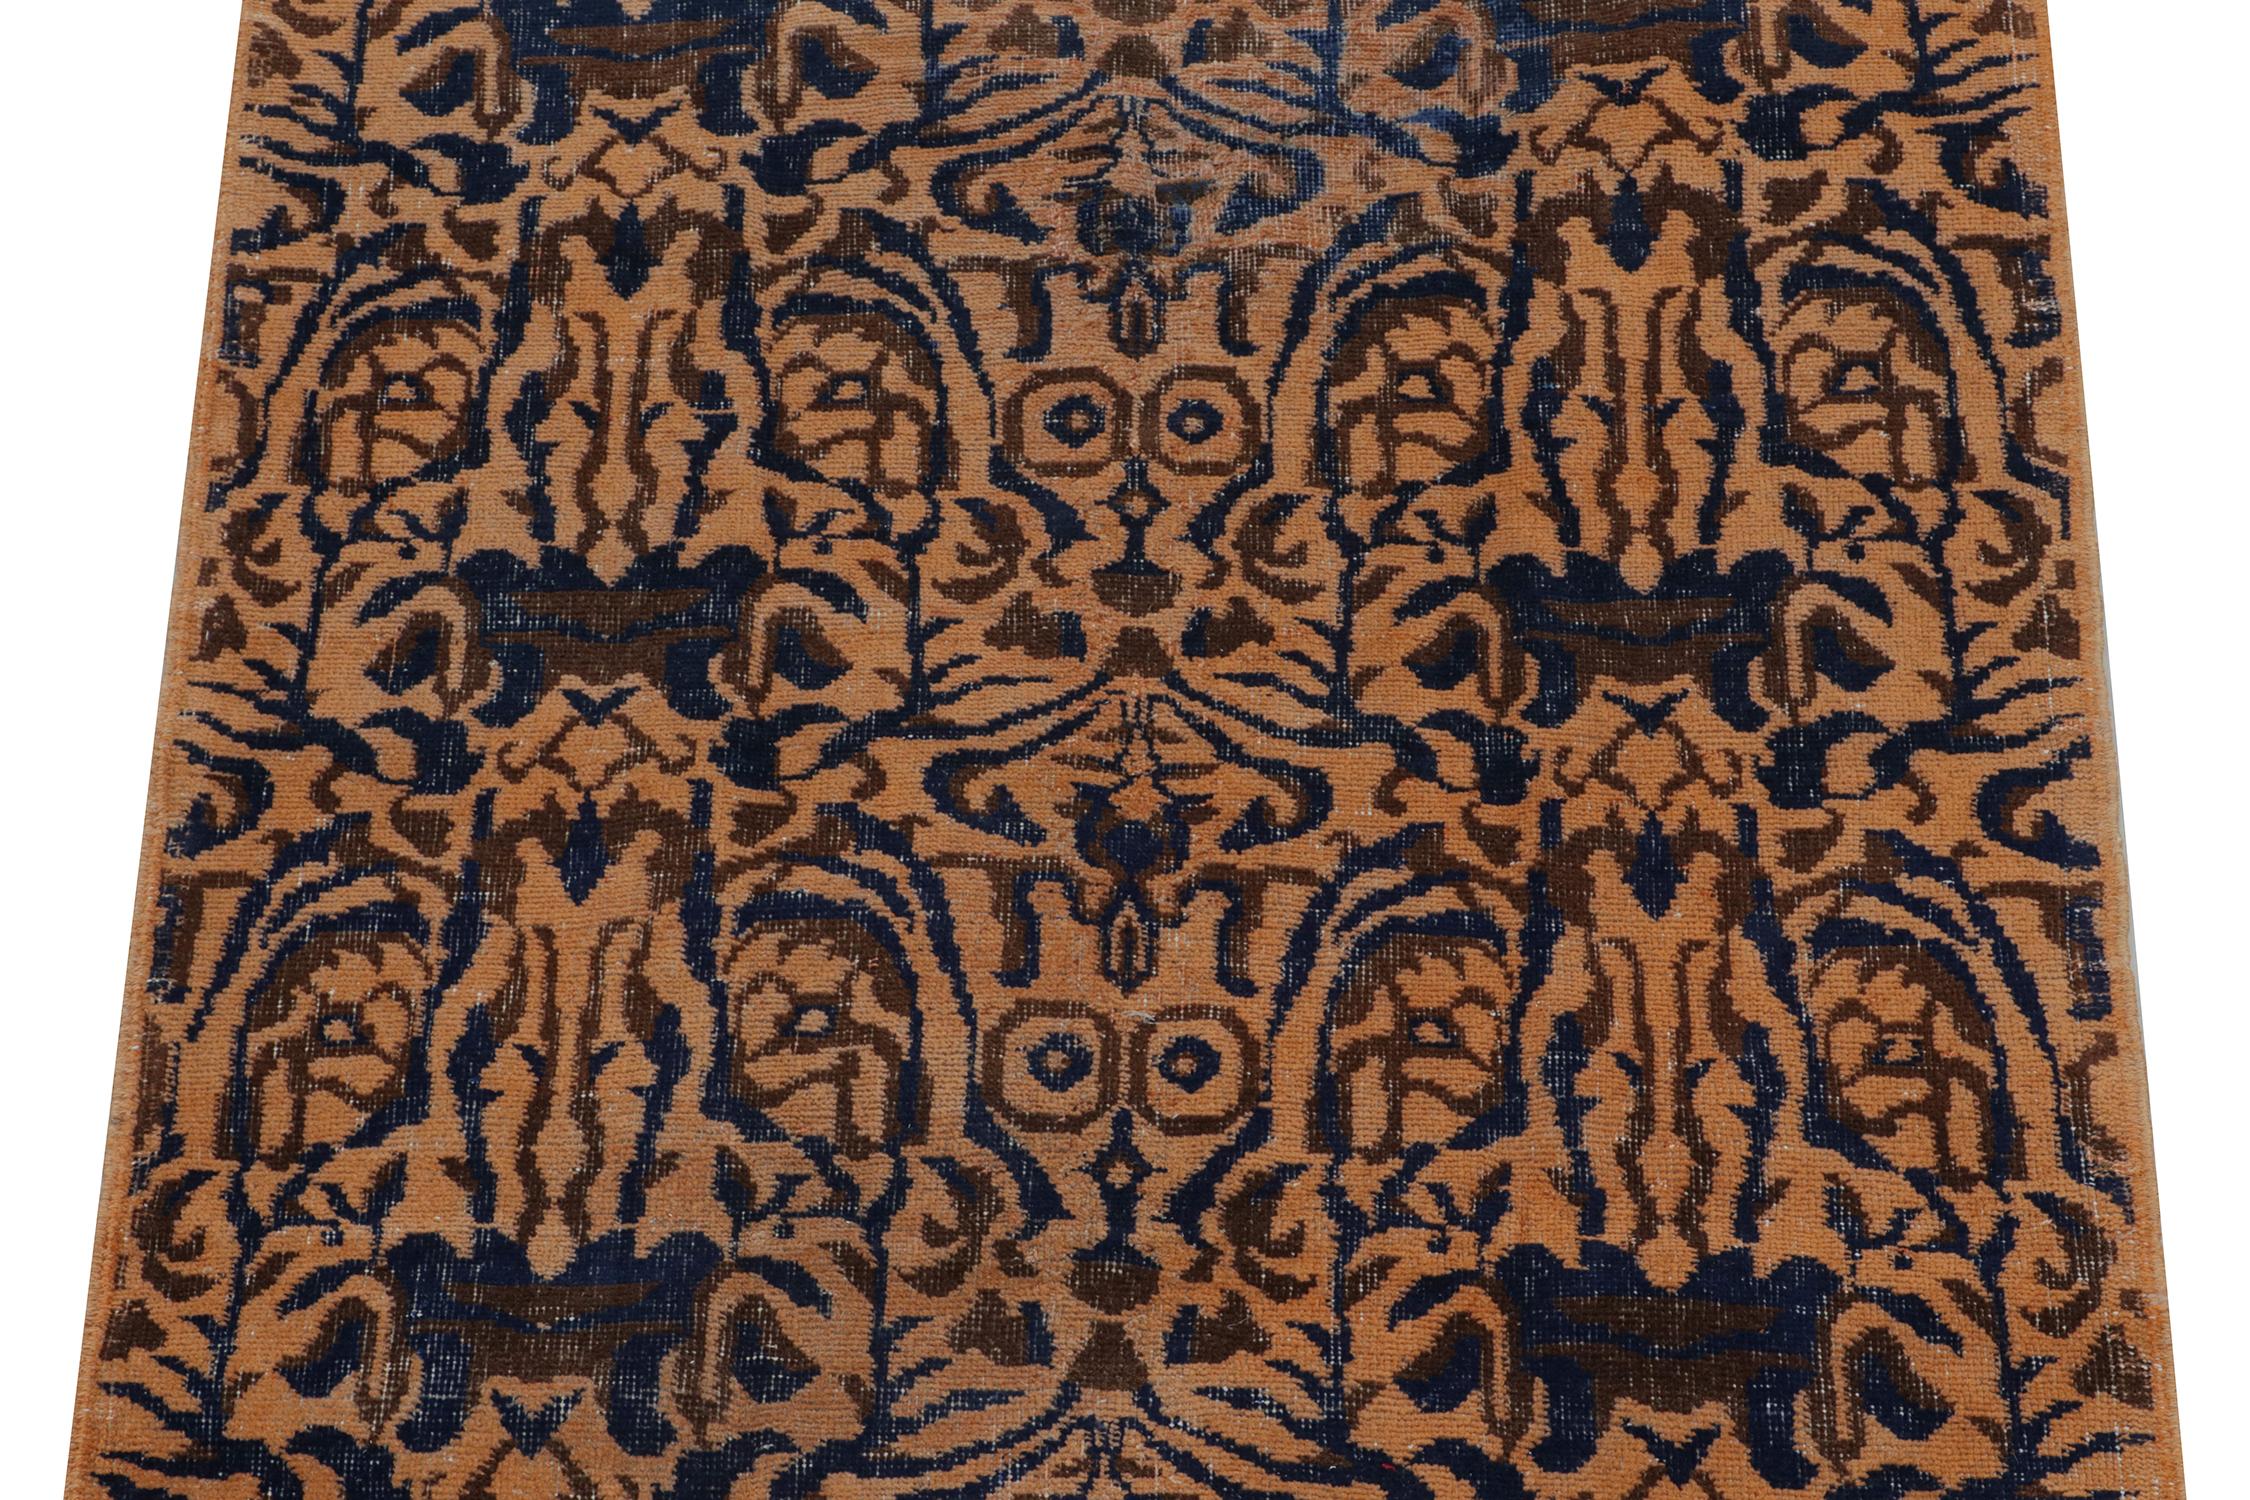 Turkish Vintage Zeki Müren Rug in Orange with Brown and Blue Patterns by Rug & Kilim For Sale